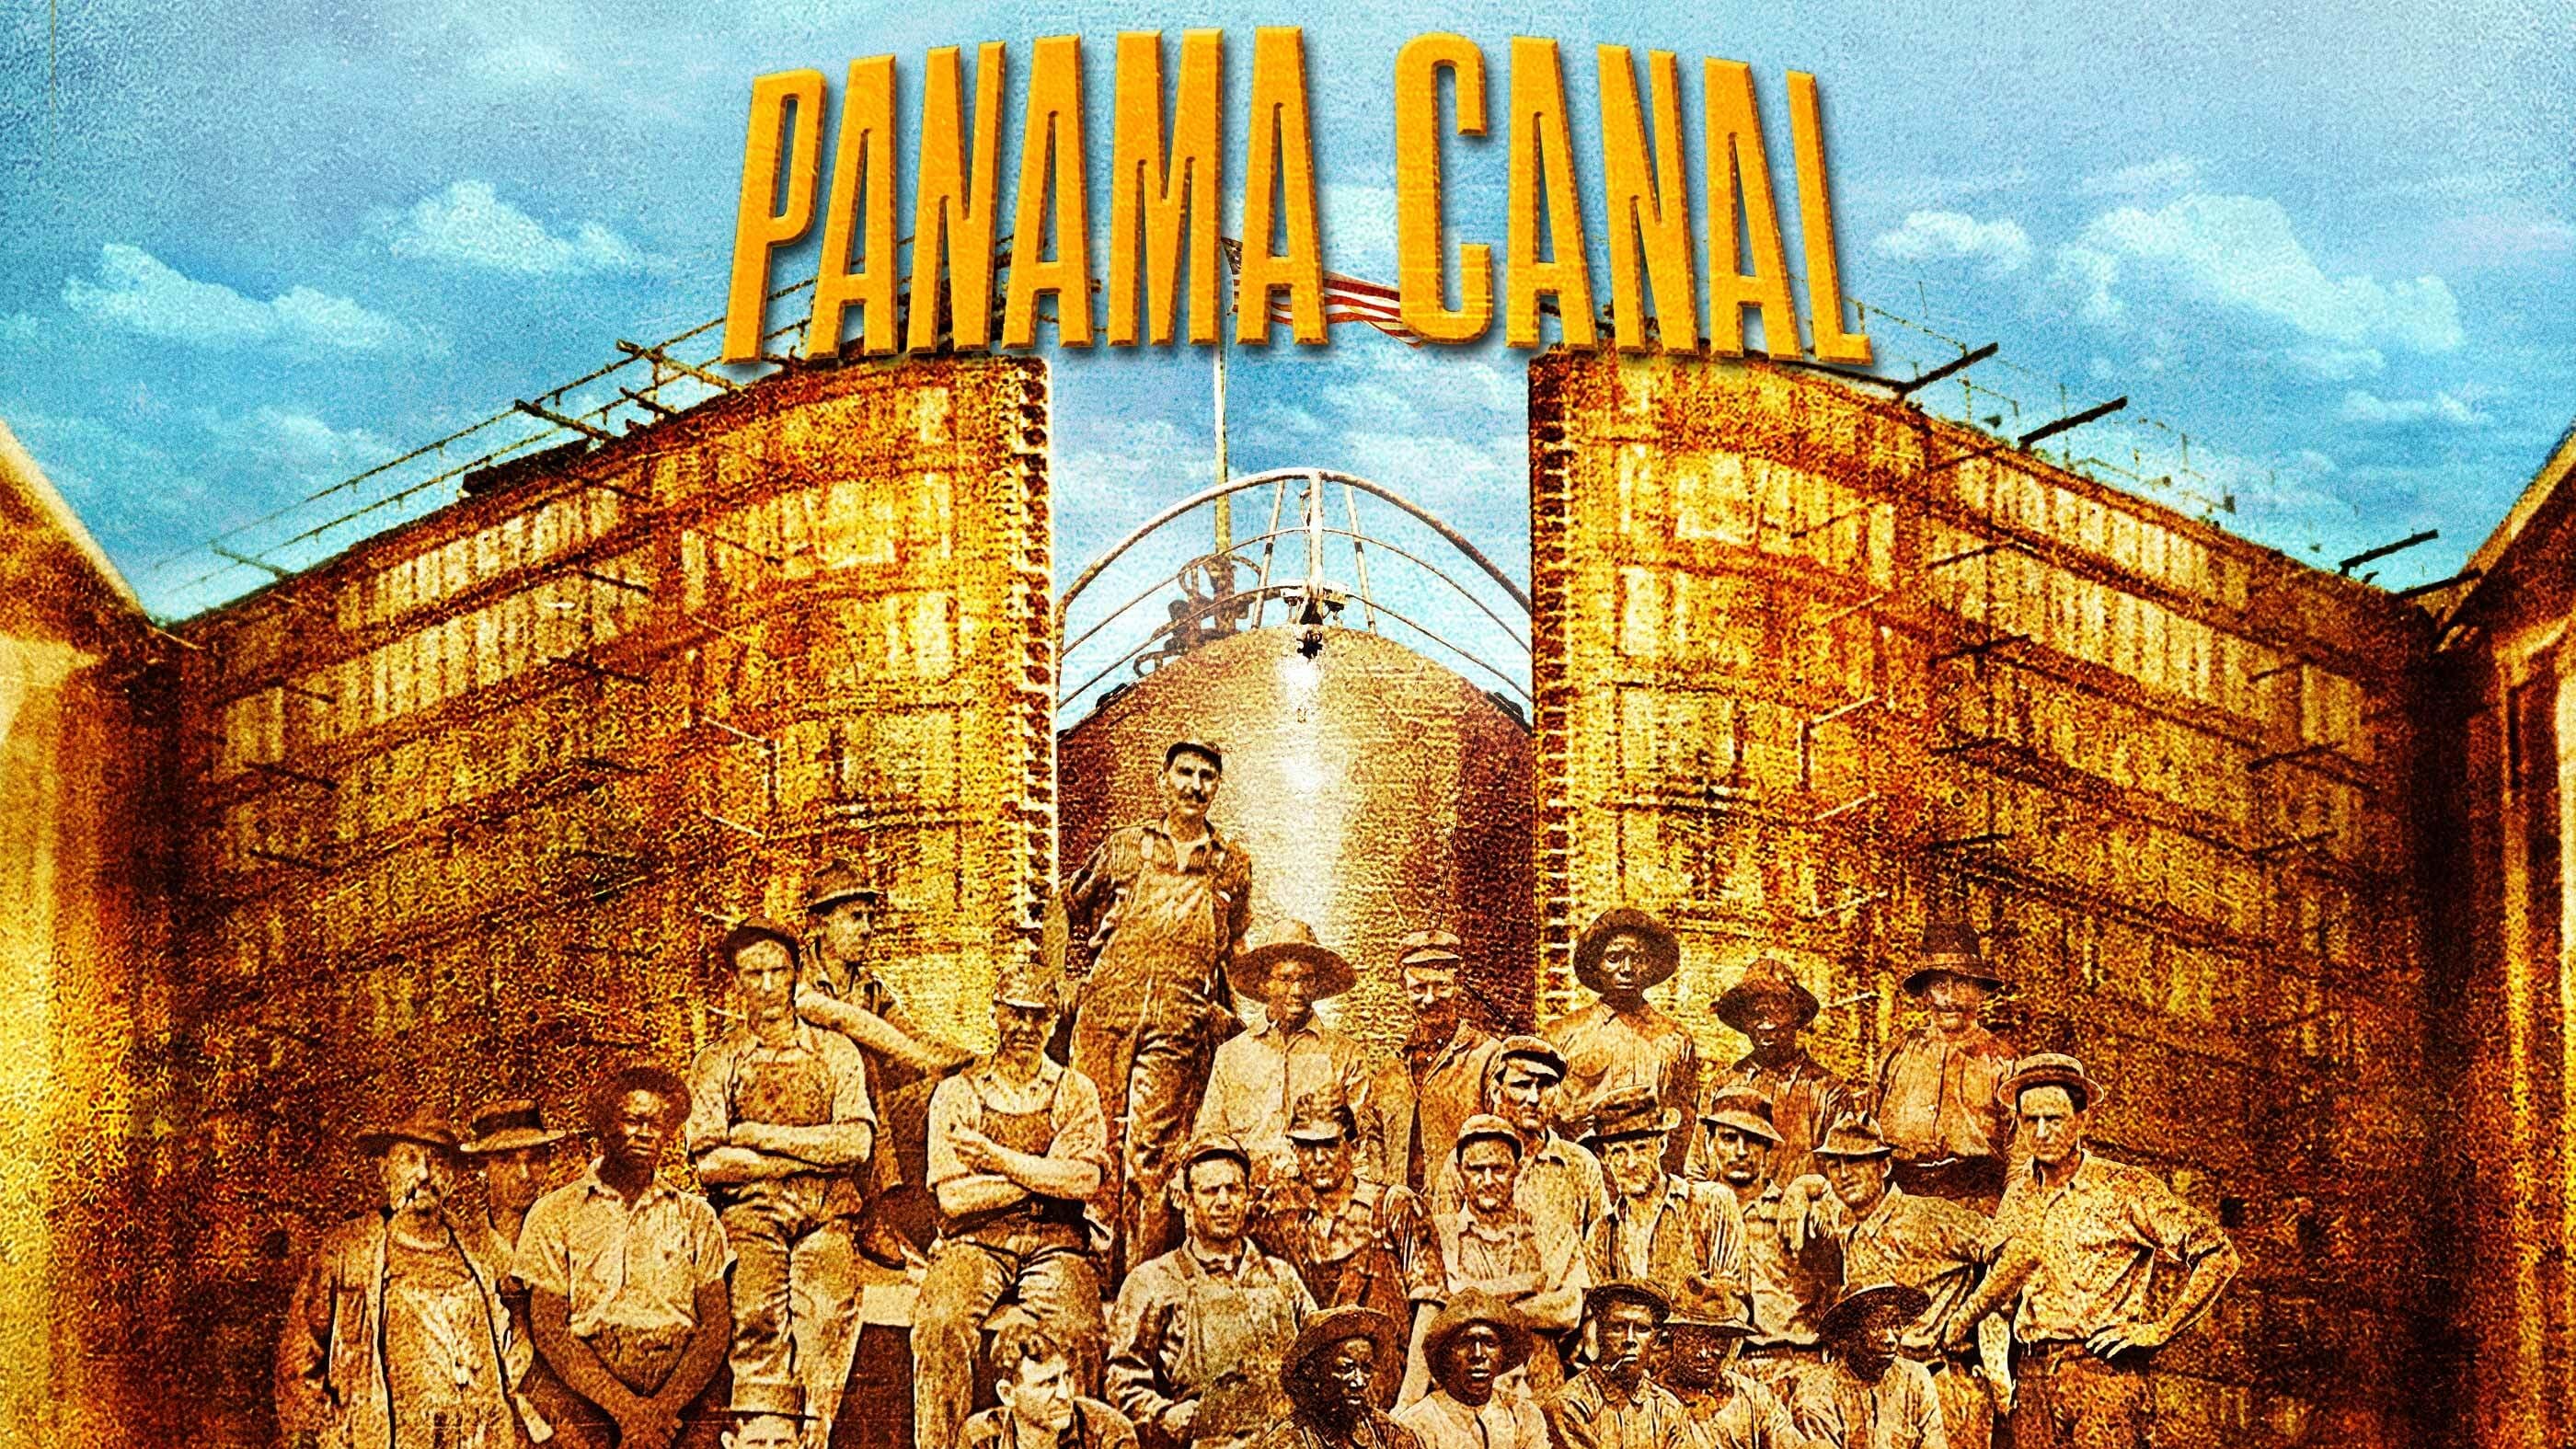 Panama Canal (2011)